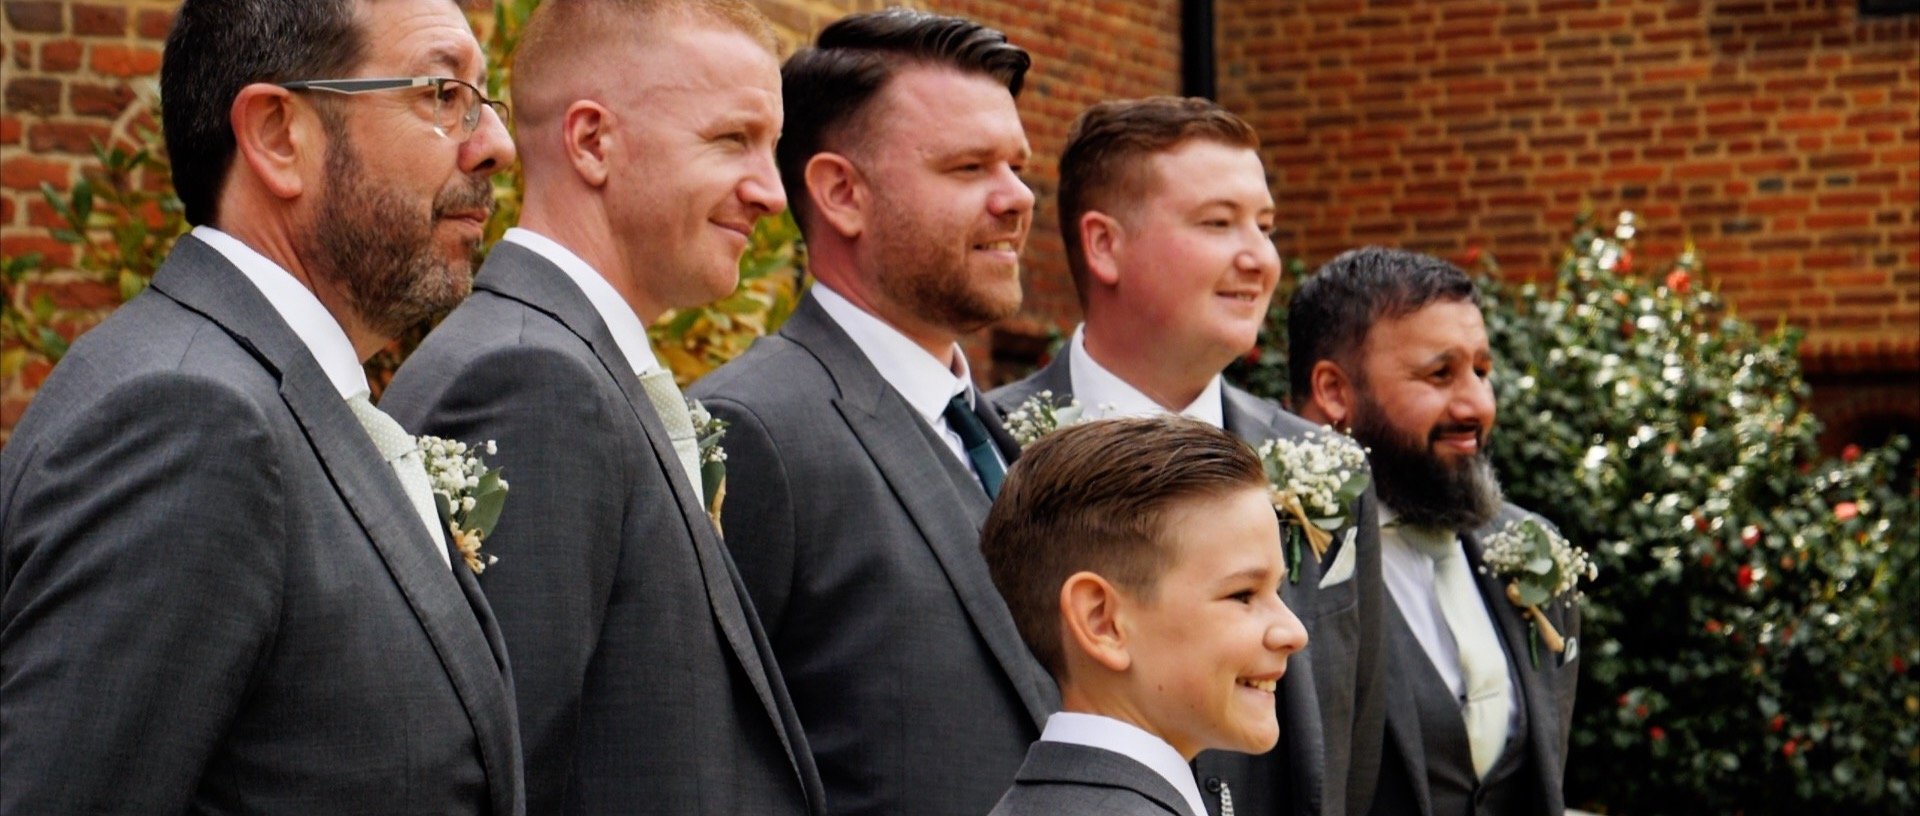 The groomsmen wedding videos Essex.jpg